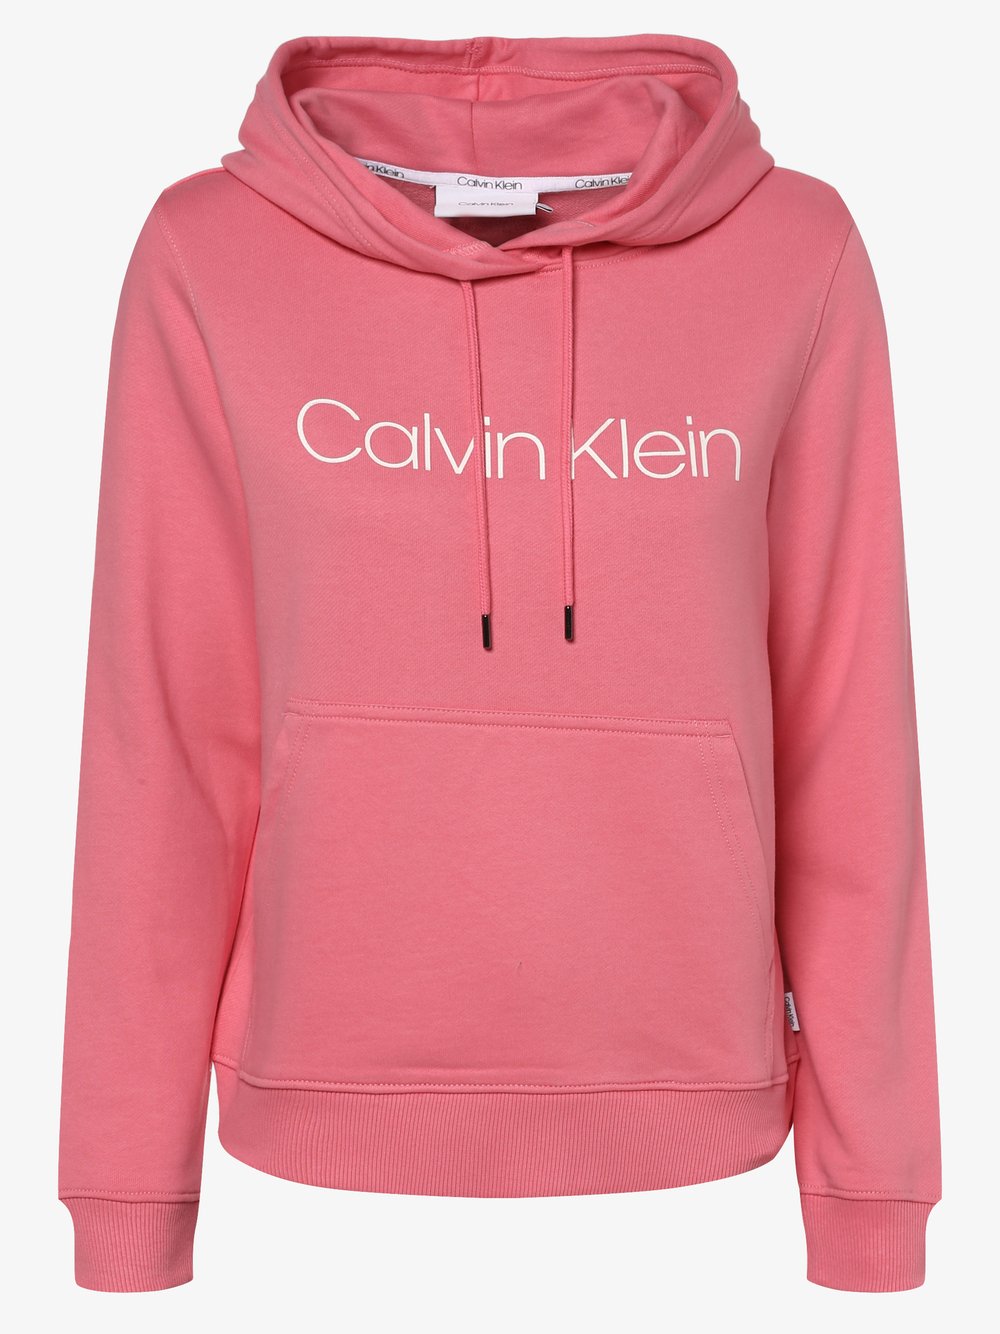 Calvin Klein - Damska bluza z kapturem, wyrazisty róż|różowy Calvin Klein